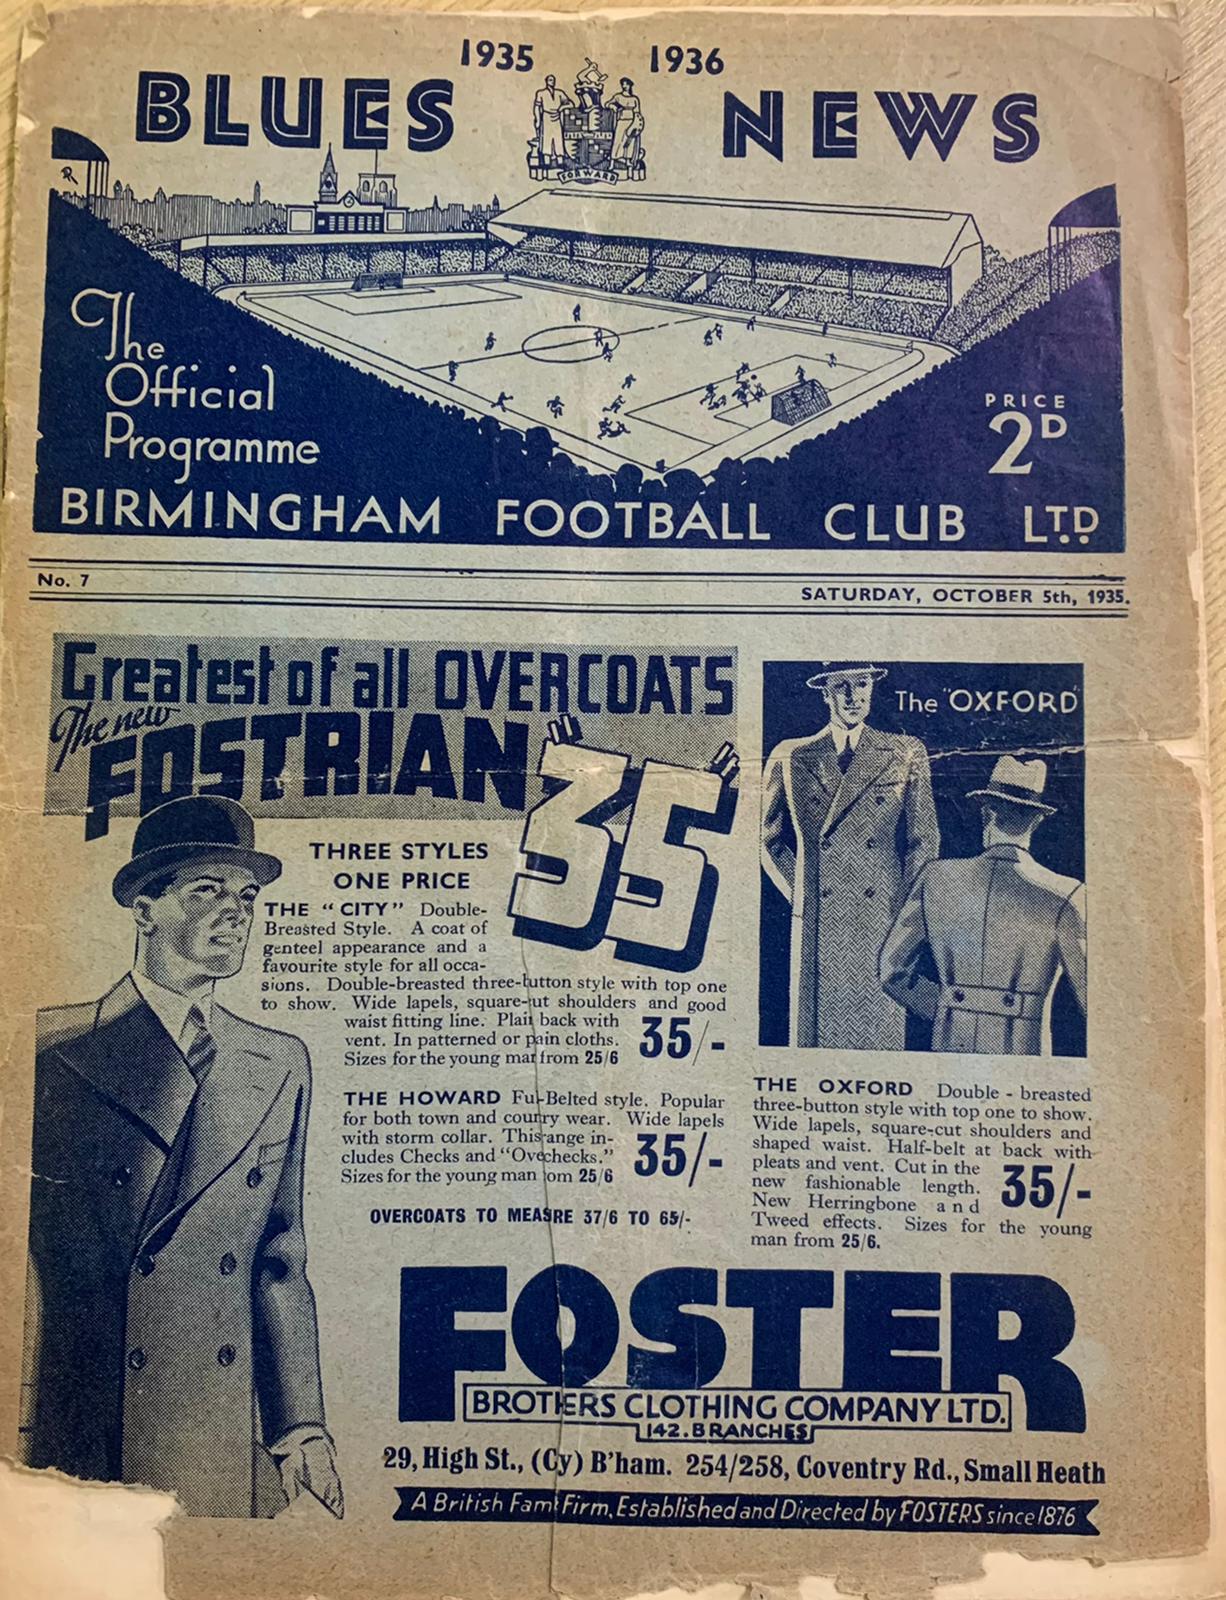 Birmingham City v Chelsea Original Programme 5th October 1935 - Extremely Rare